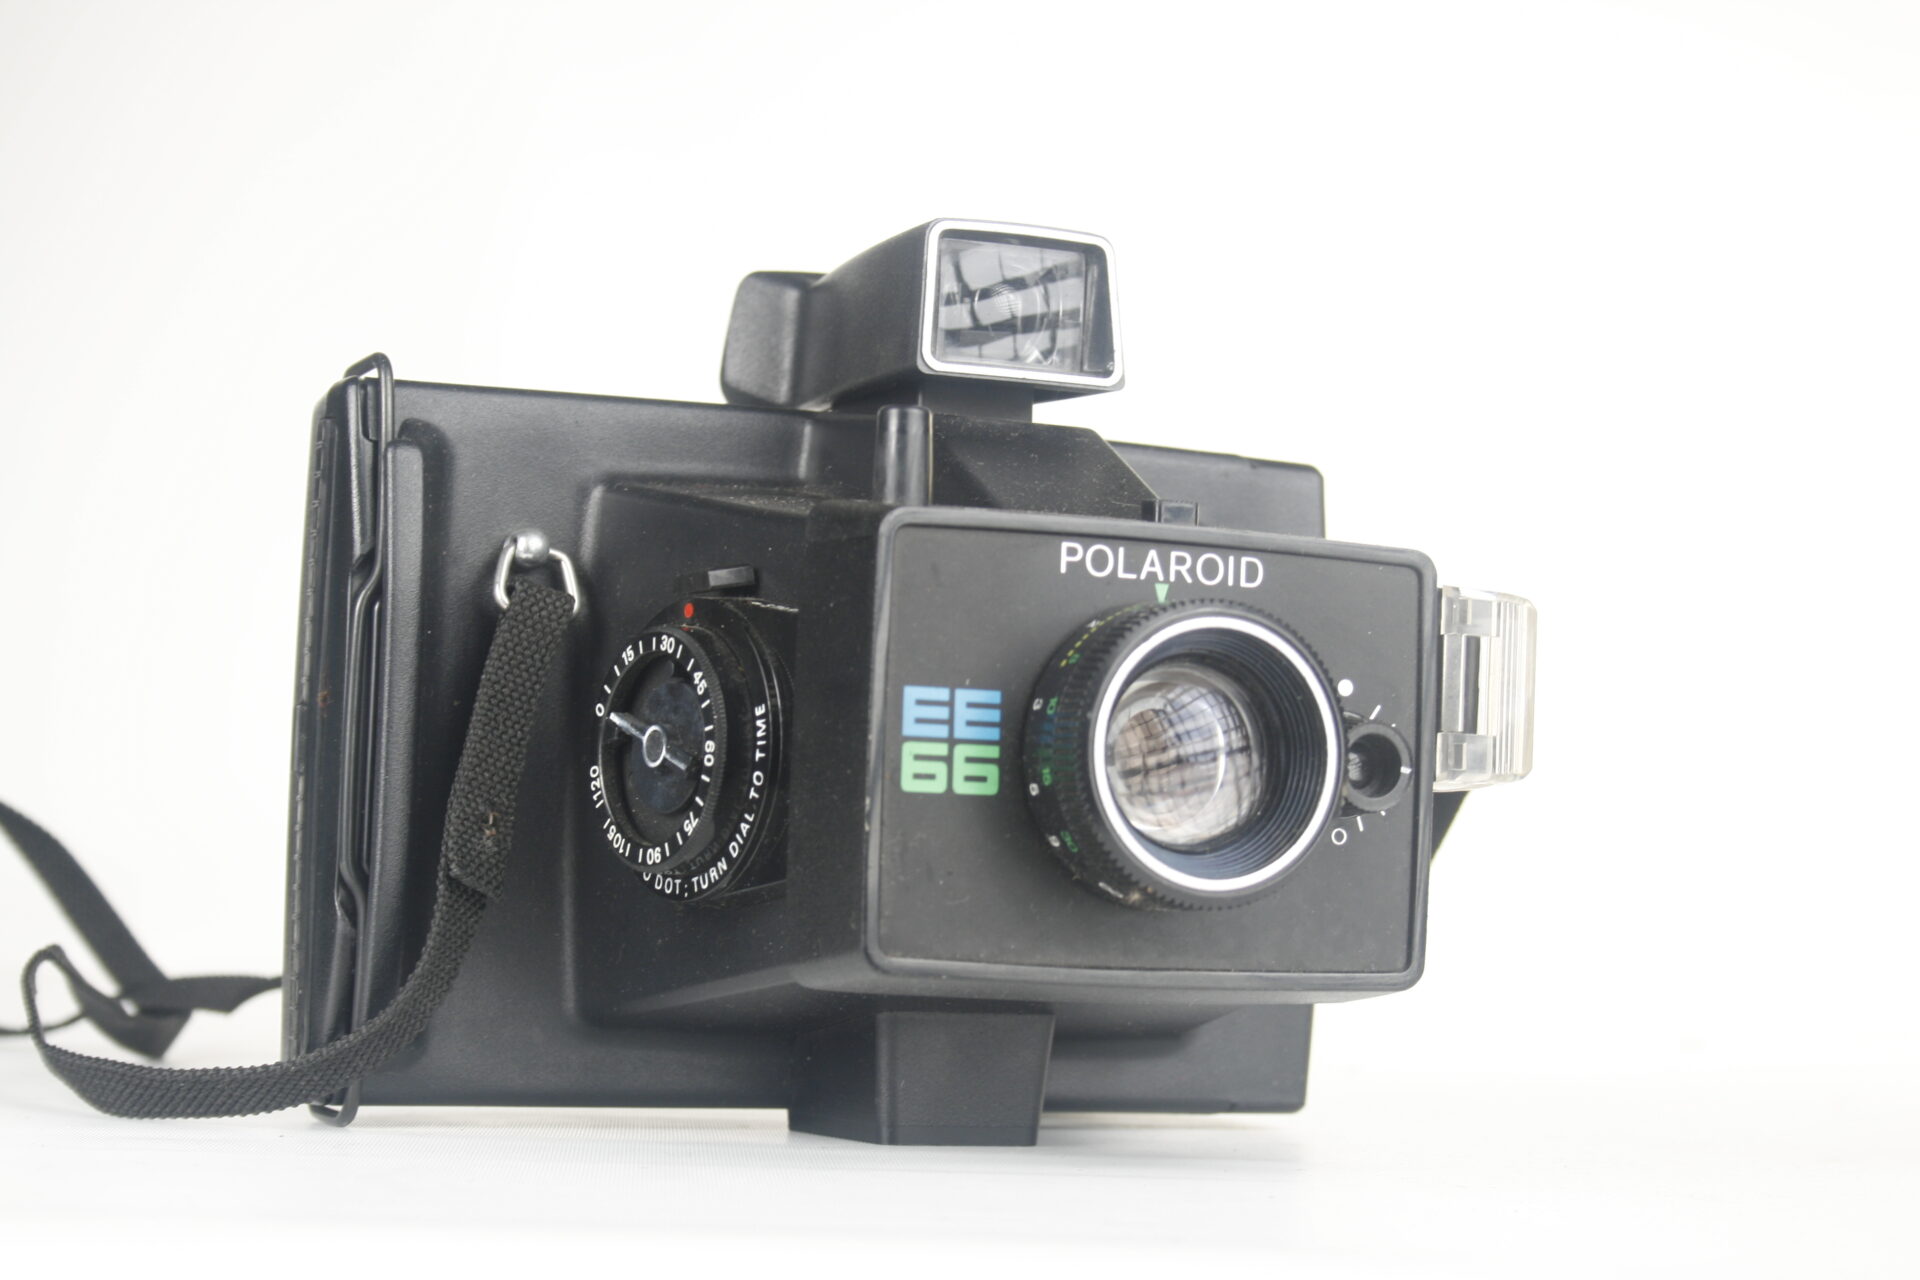 Polaroid EE 66. Instant filmpack camera. 1976-1977. USA